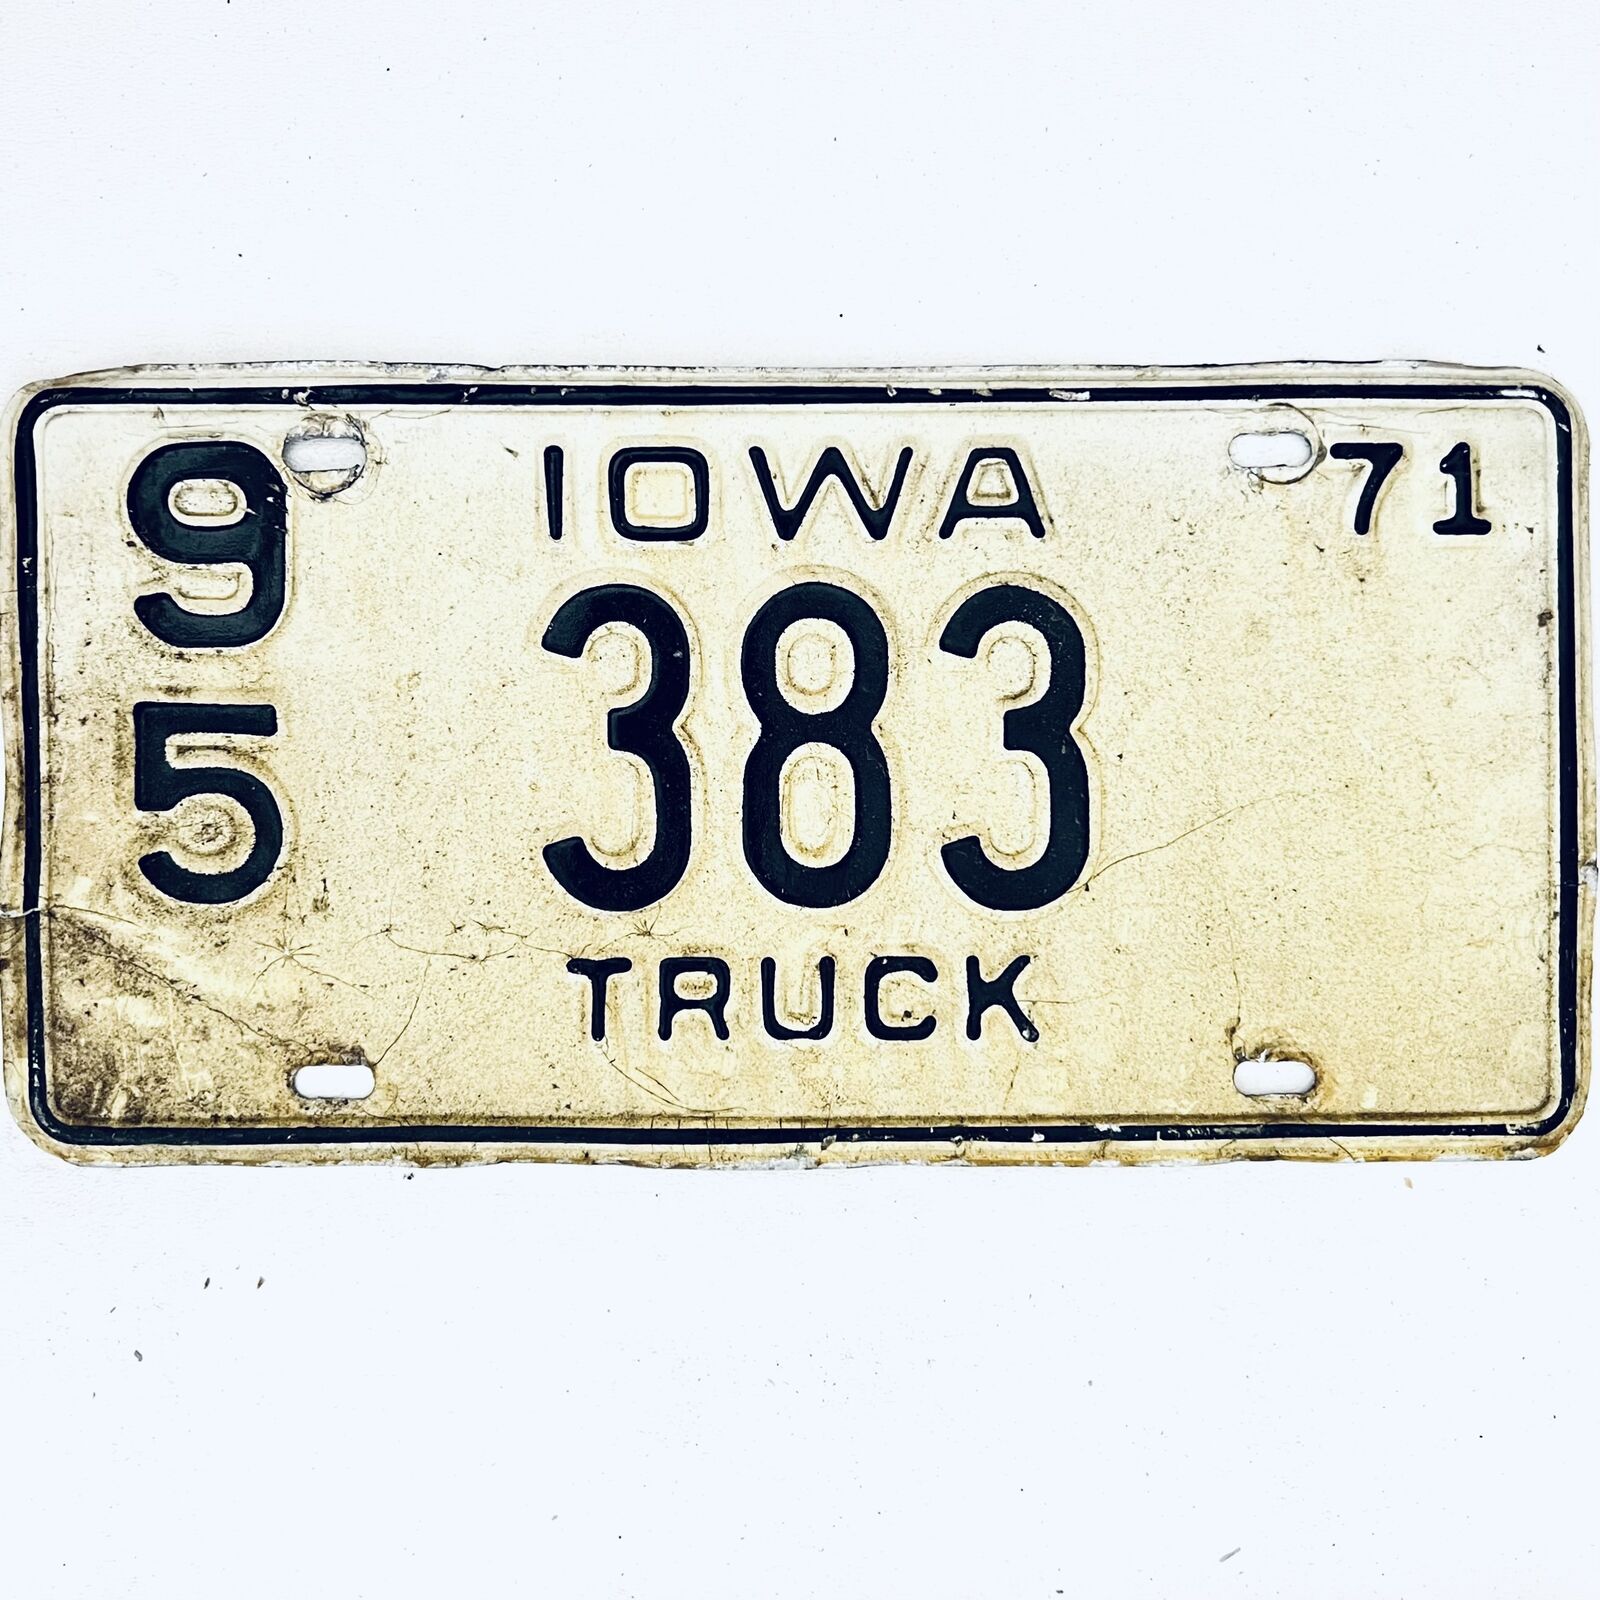 1971 United States Iowa Winnebago County Truck License Plate 95 383